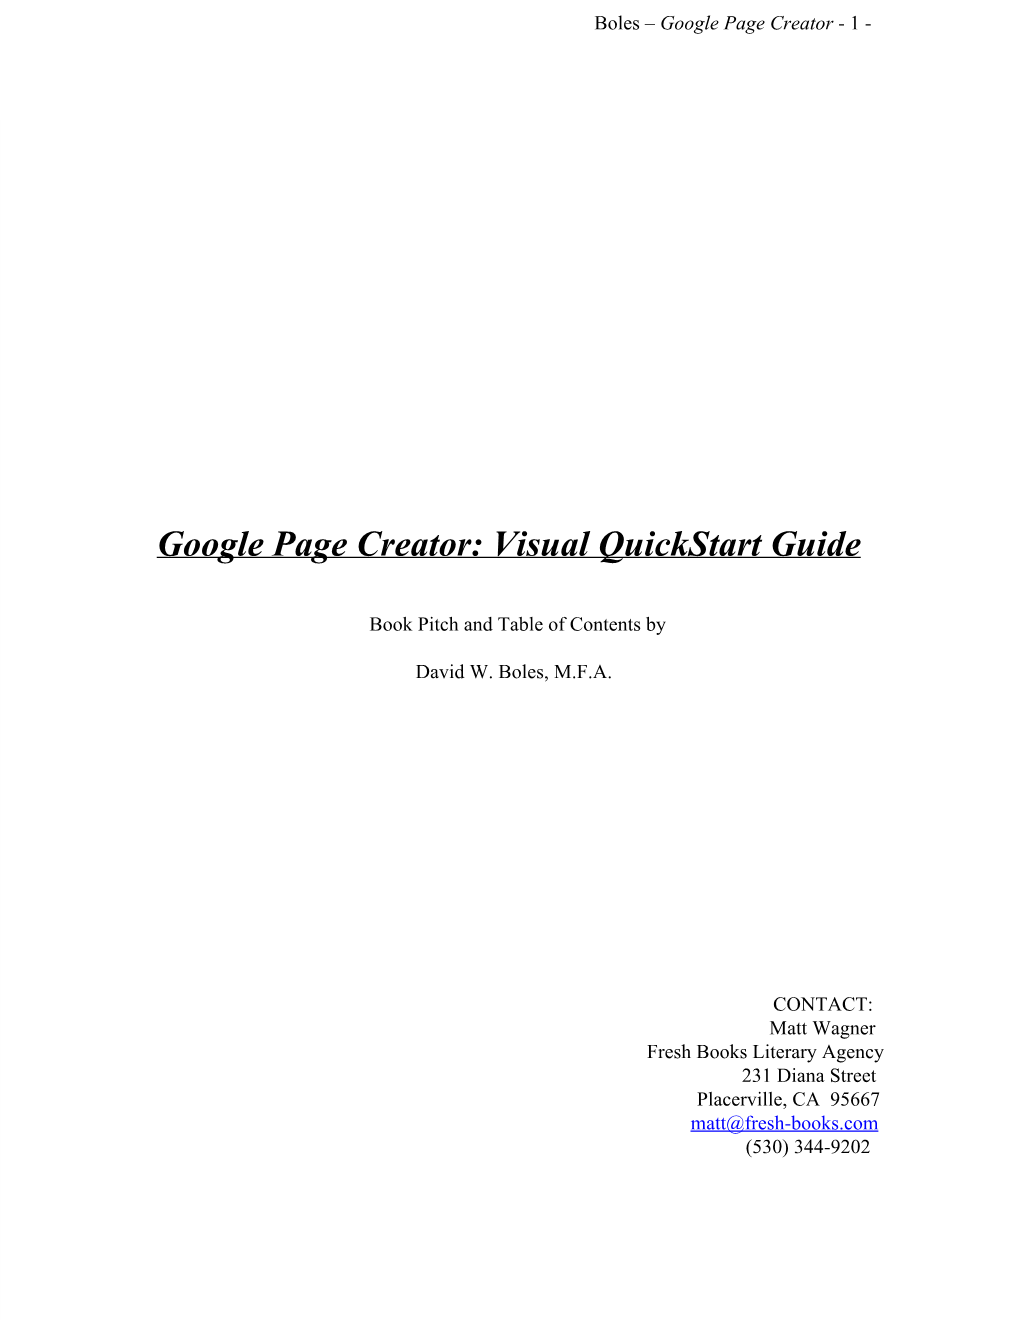 Google Page Creator: Visual Quickstart Guide